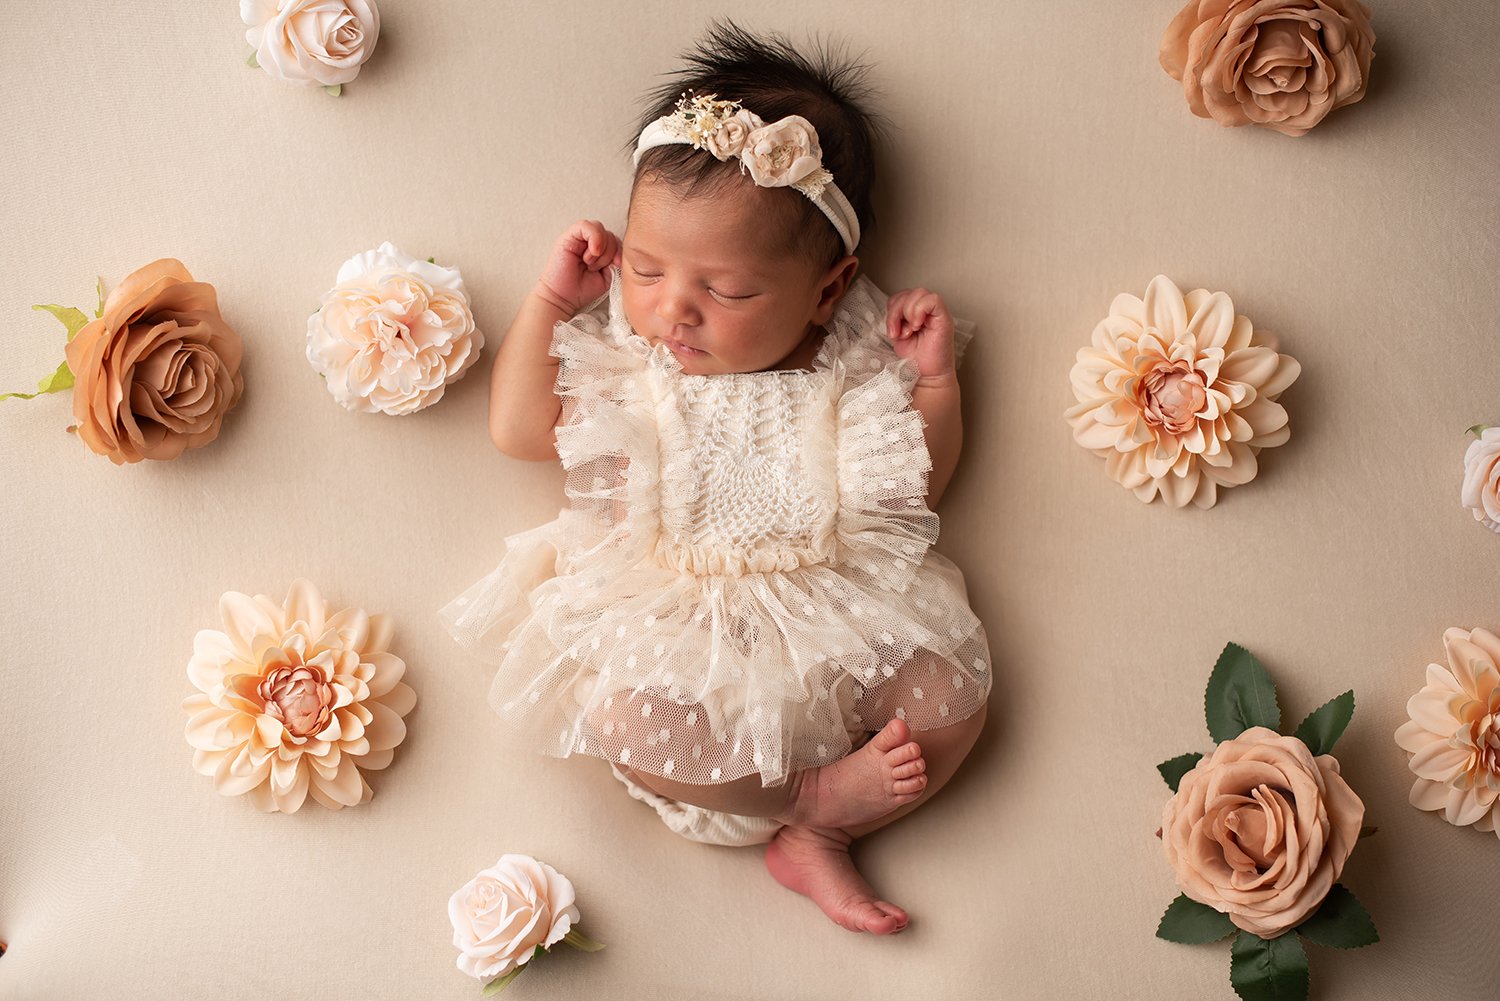 newborn-photography-columbus-ohio-flowers-sleeping-baby-lace-dress-barebabyphotography.jpg